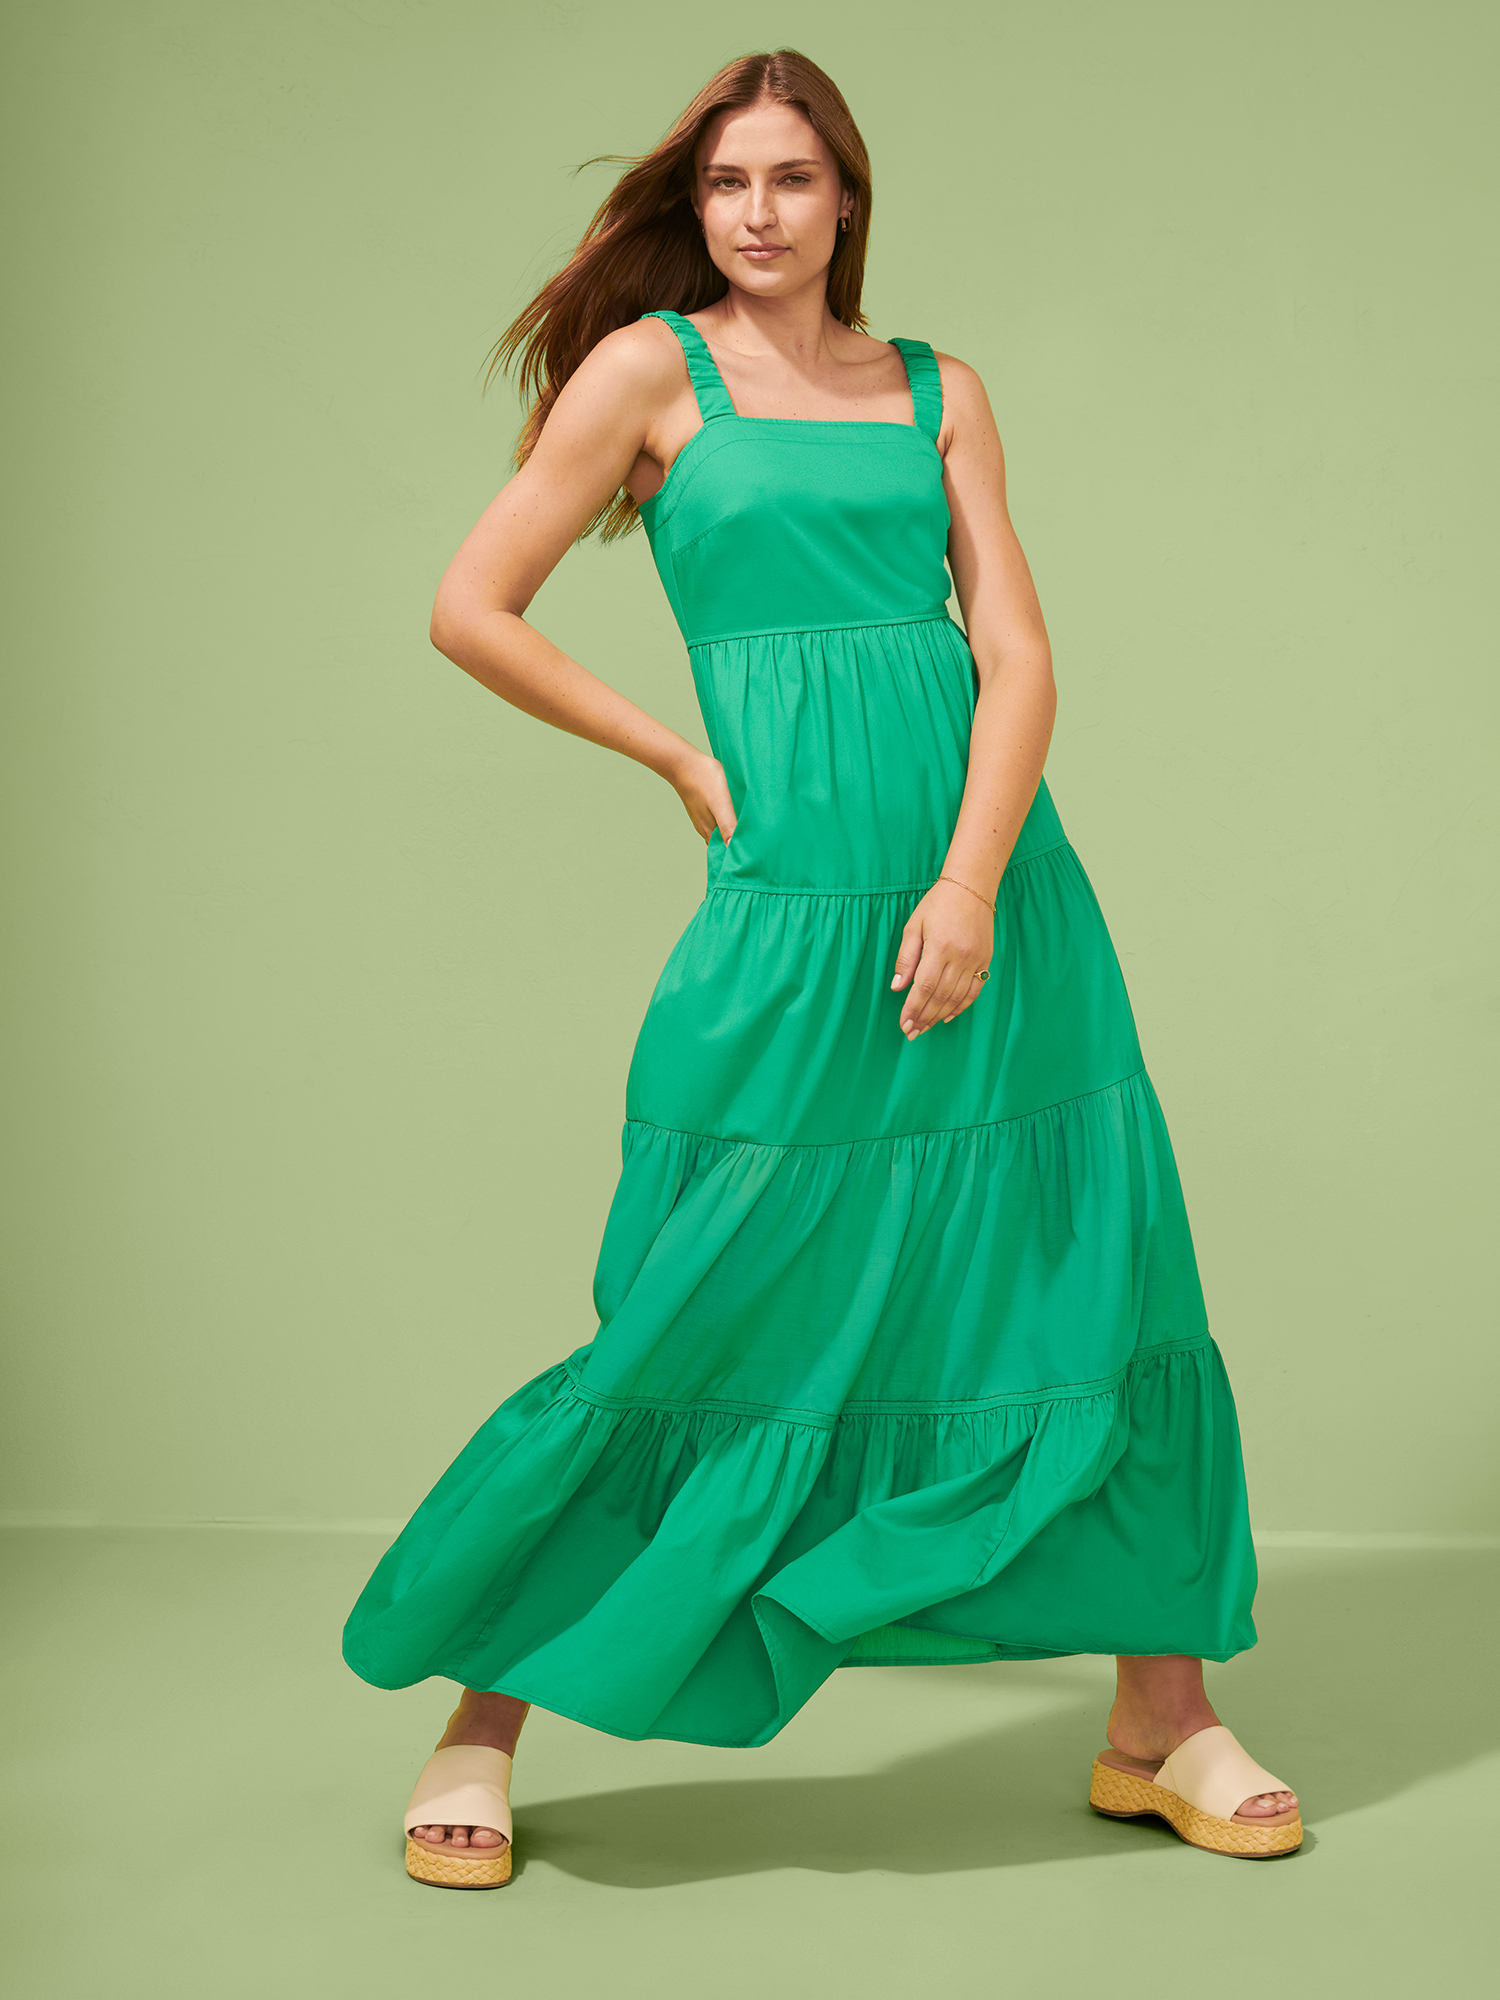 Free Assembly Women's Sleeveless Square Neck Maxi Dress with Elastic Straps, Sizes XS-XXL - image 3 of 6